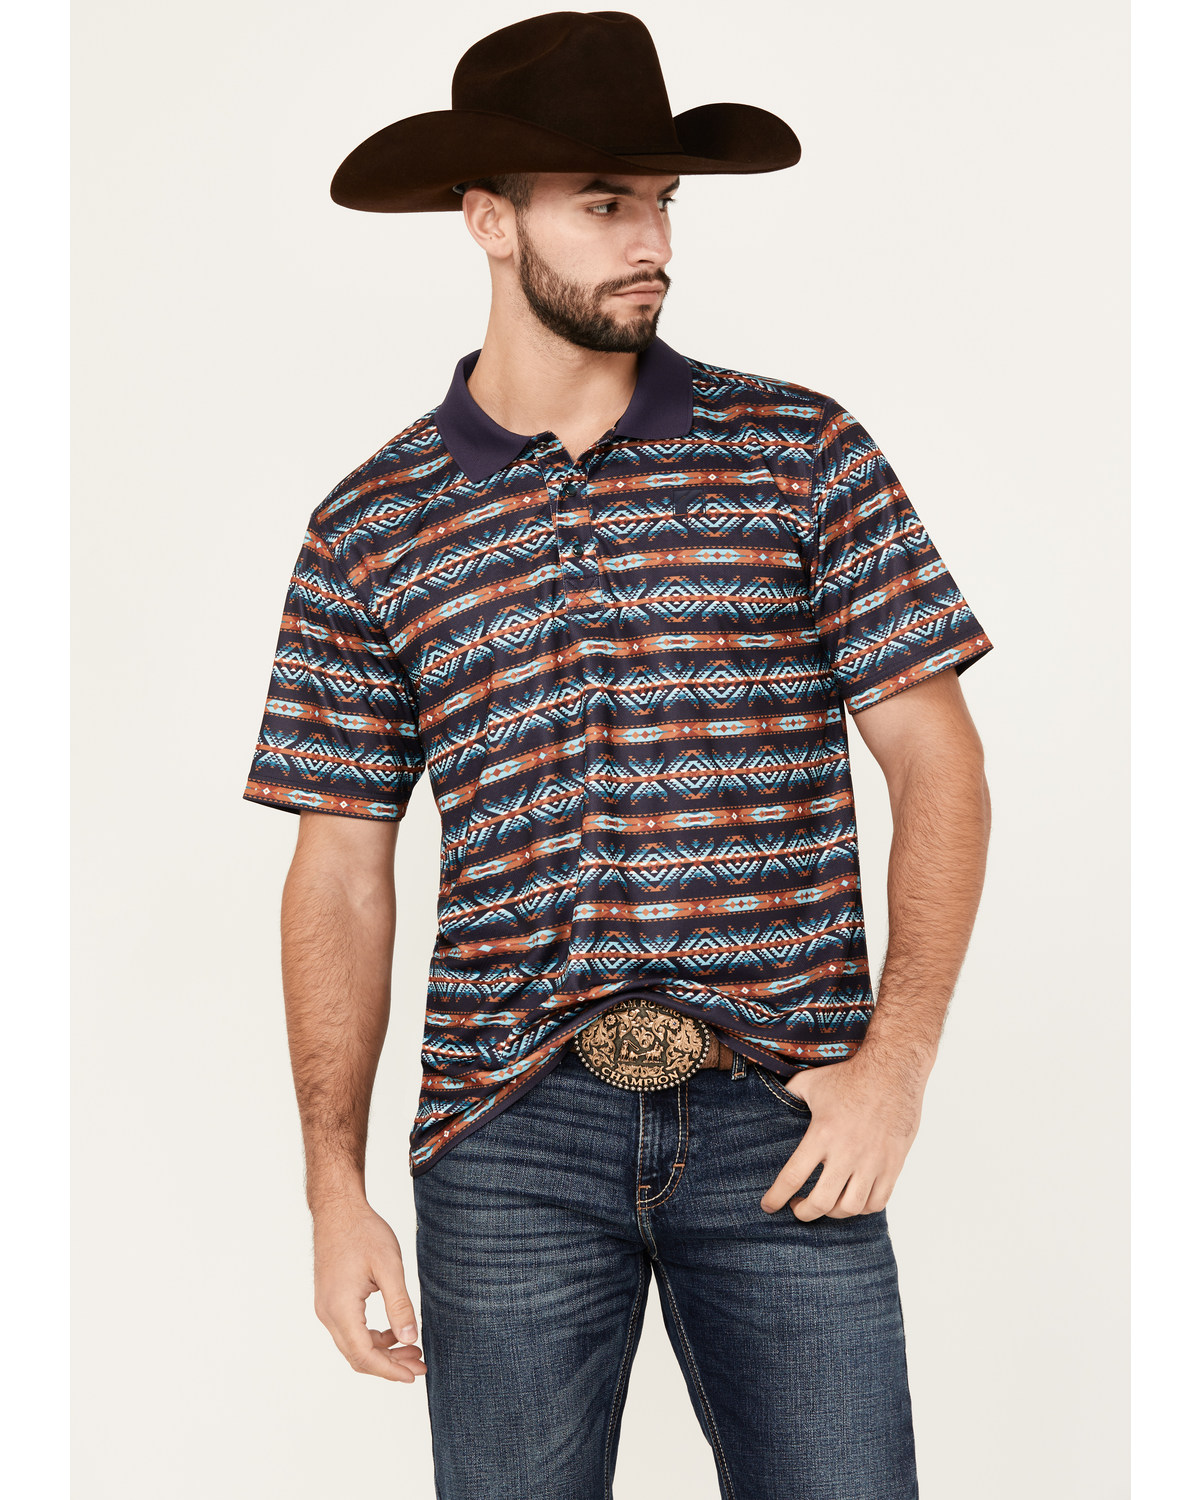 RANK 45® Men's Lusaka Southwestern Print Short Sleeve Polo Shirt